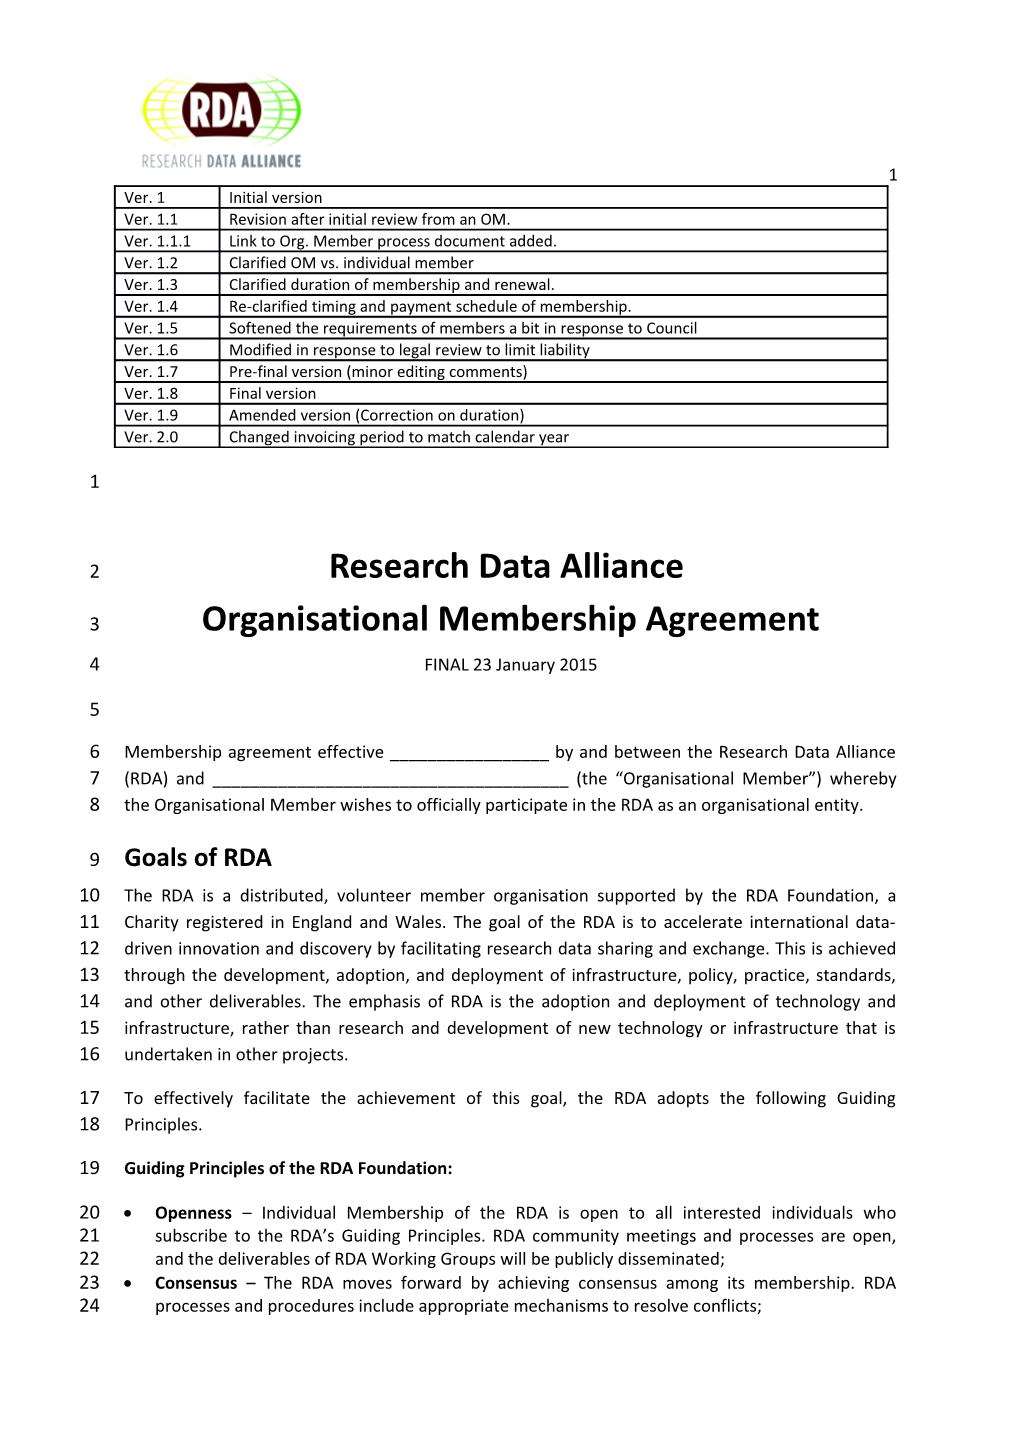 Research Data Alliance Organisational Membership Agreement